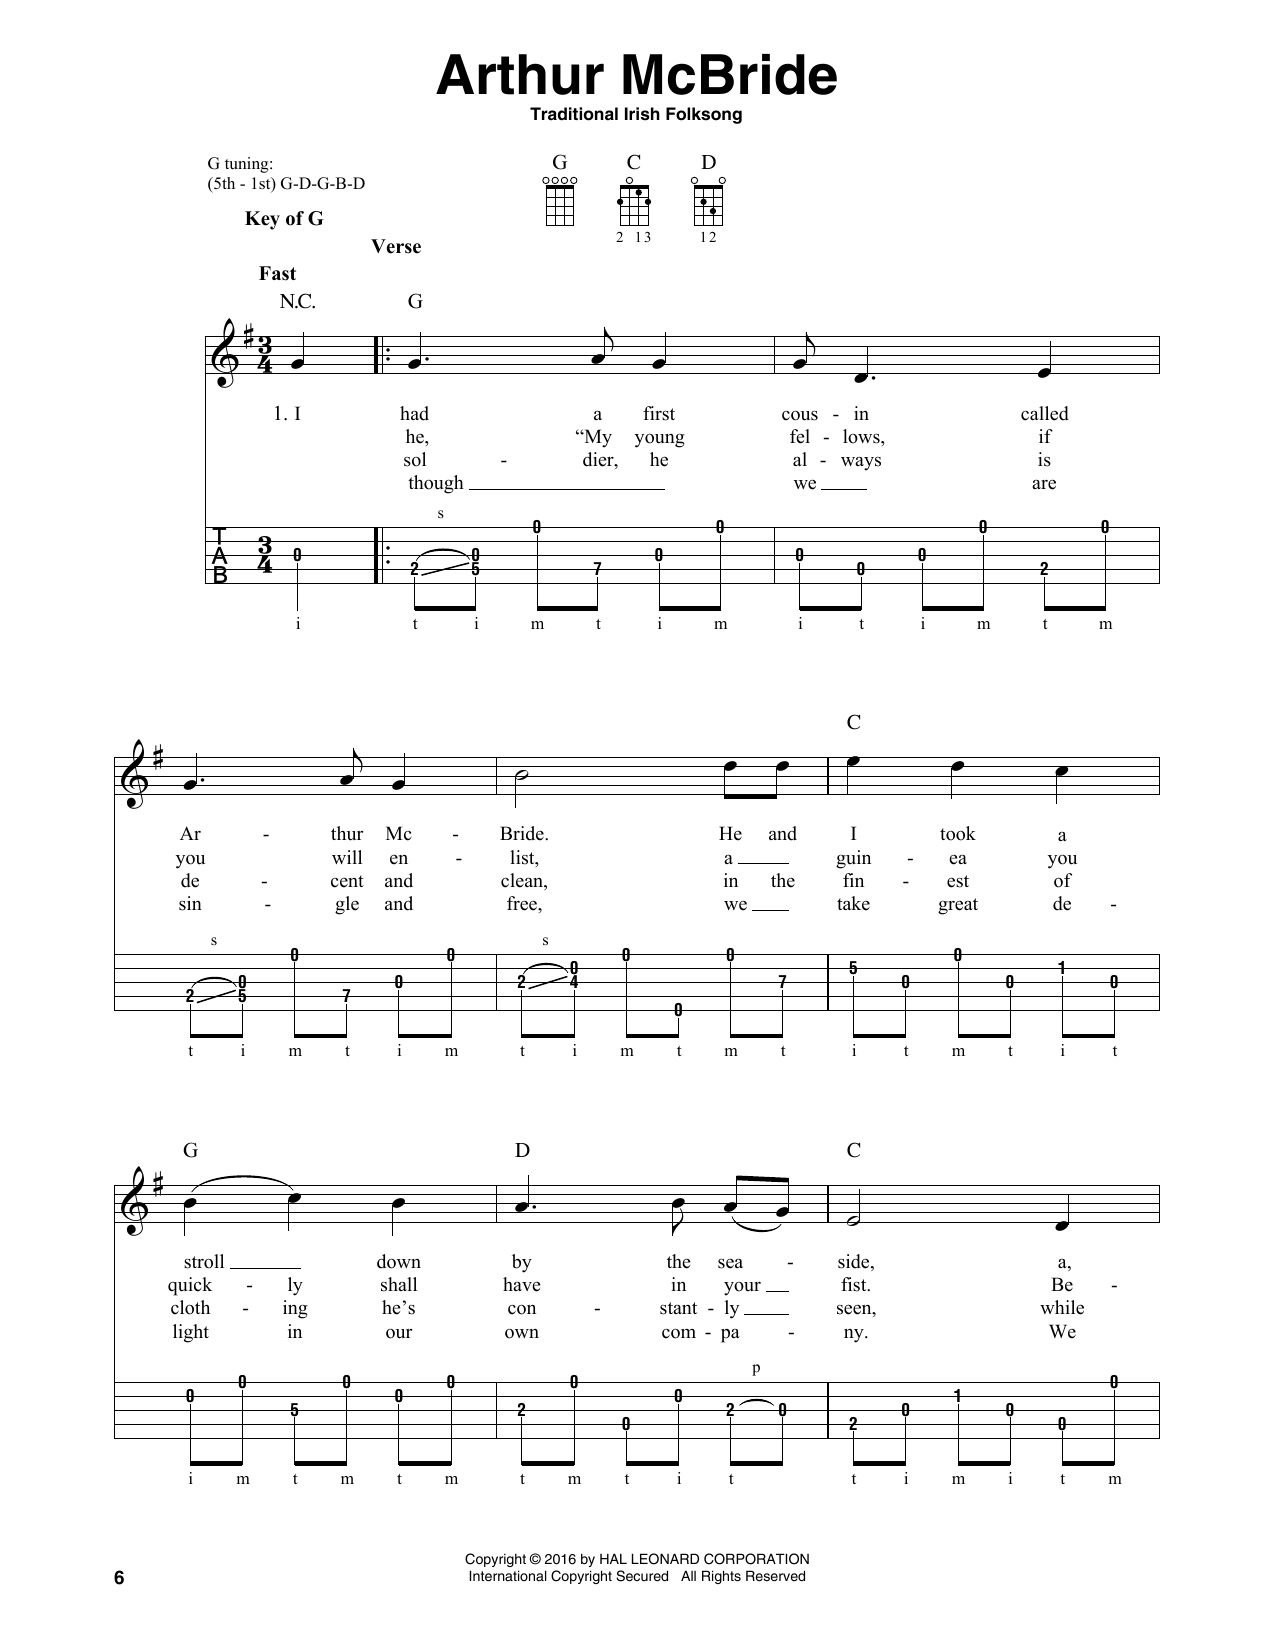 Traditional Irish Folk Song Arthur McBride Sheet Music Notes & Chords for Banjo - Download or Print PDF